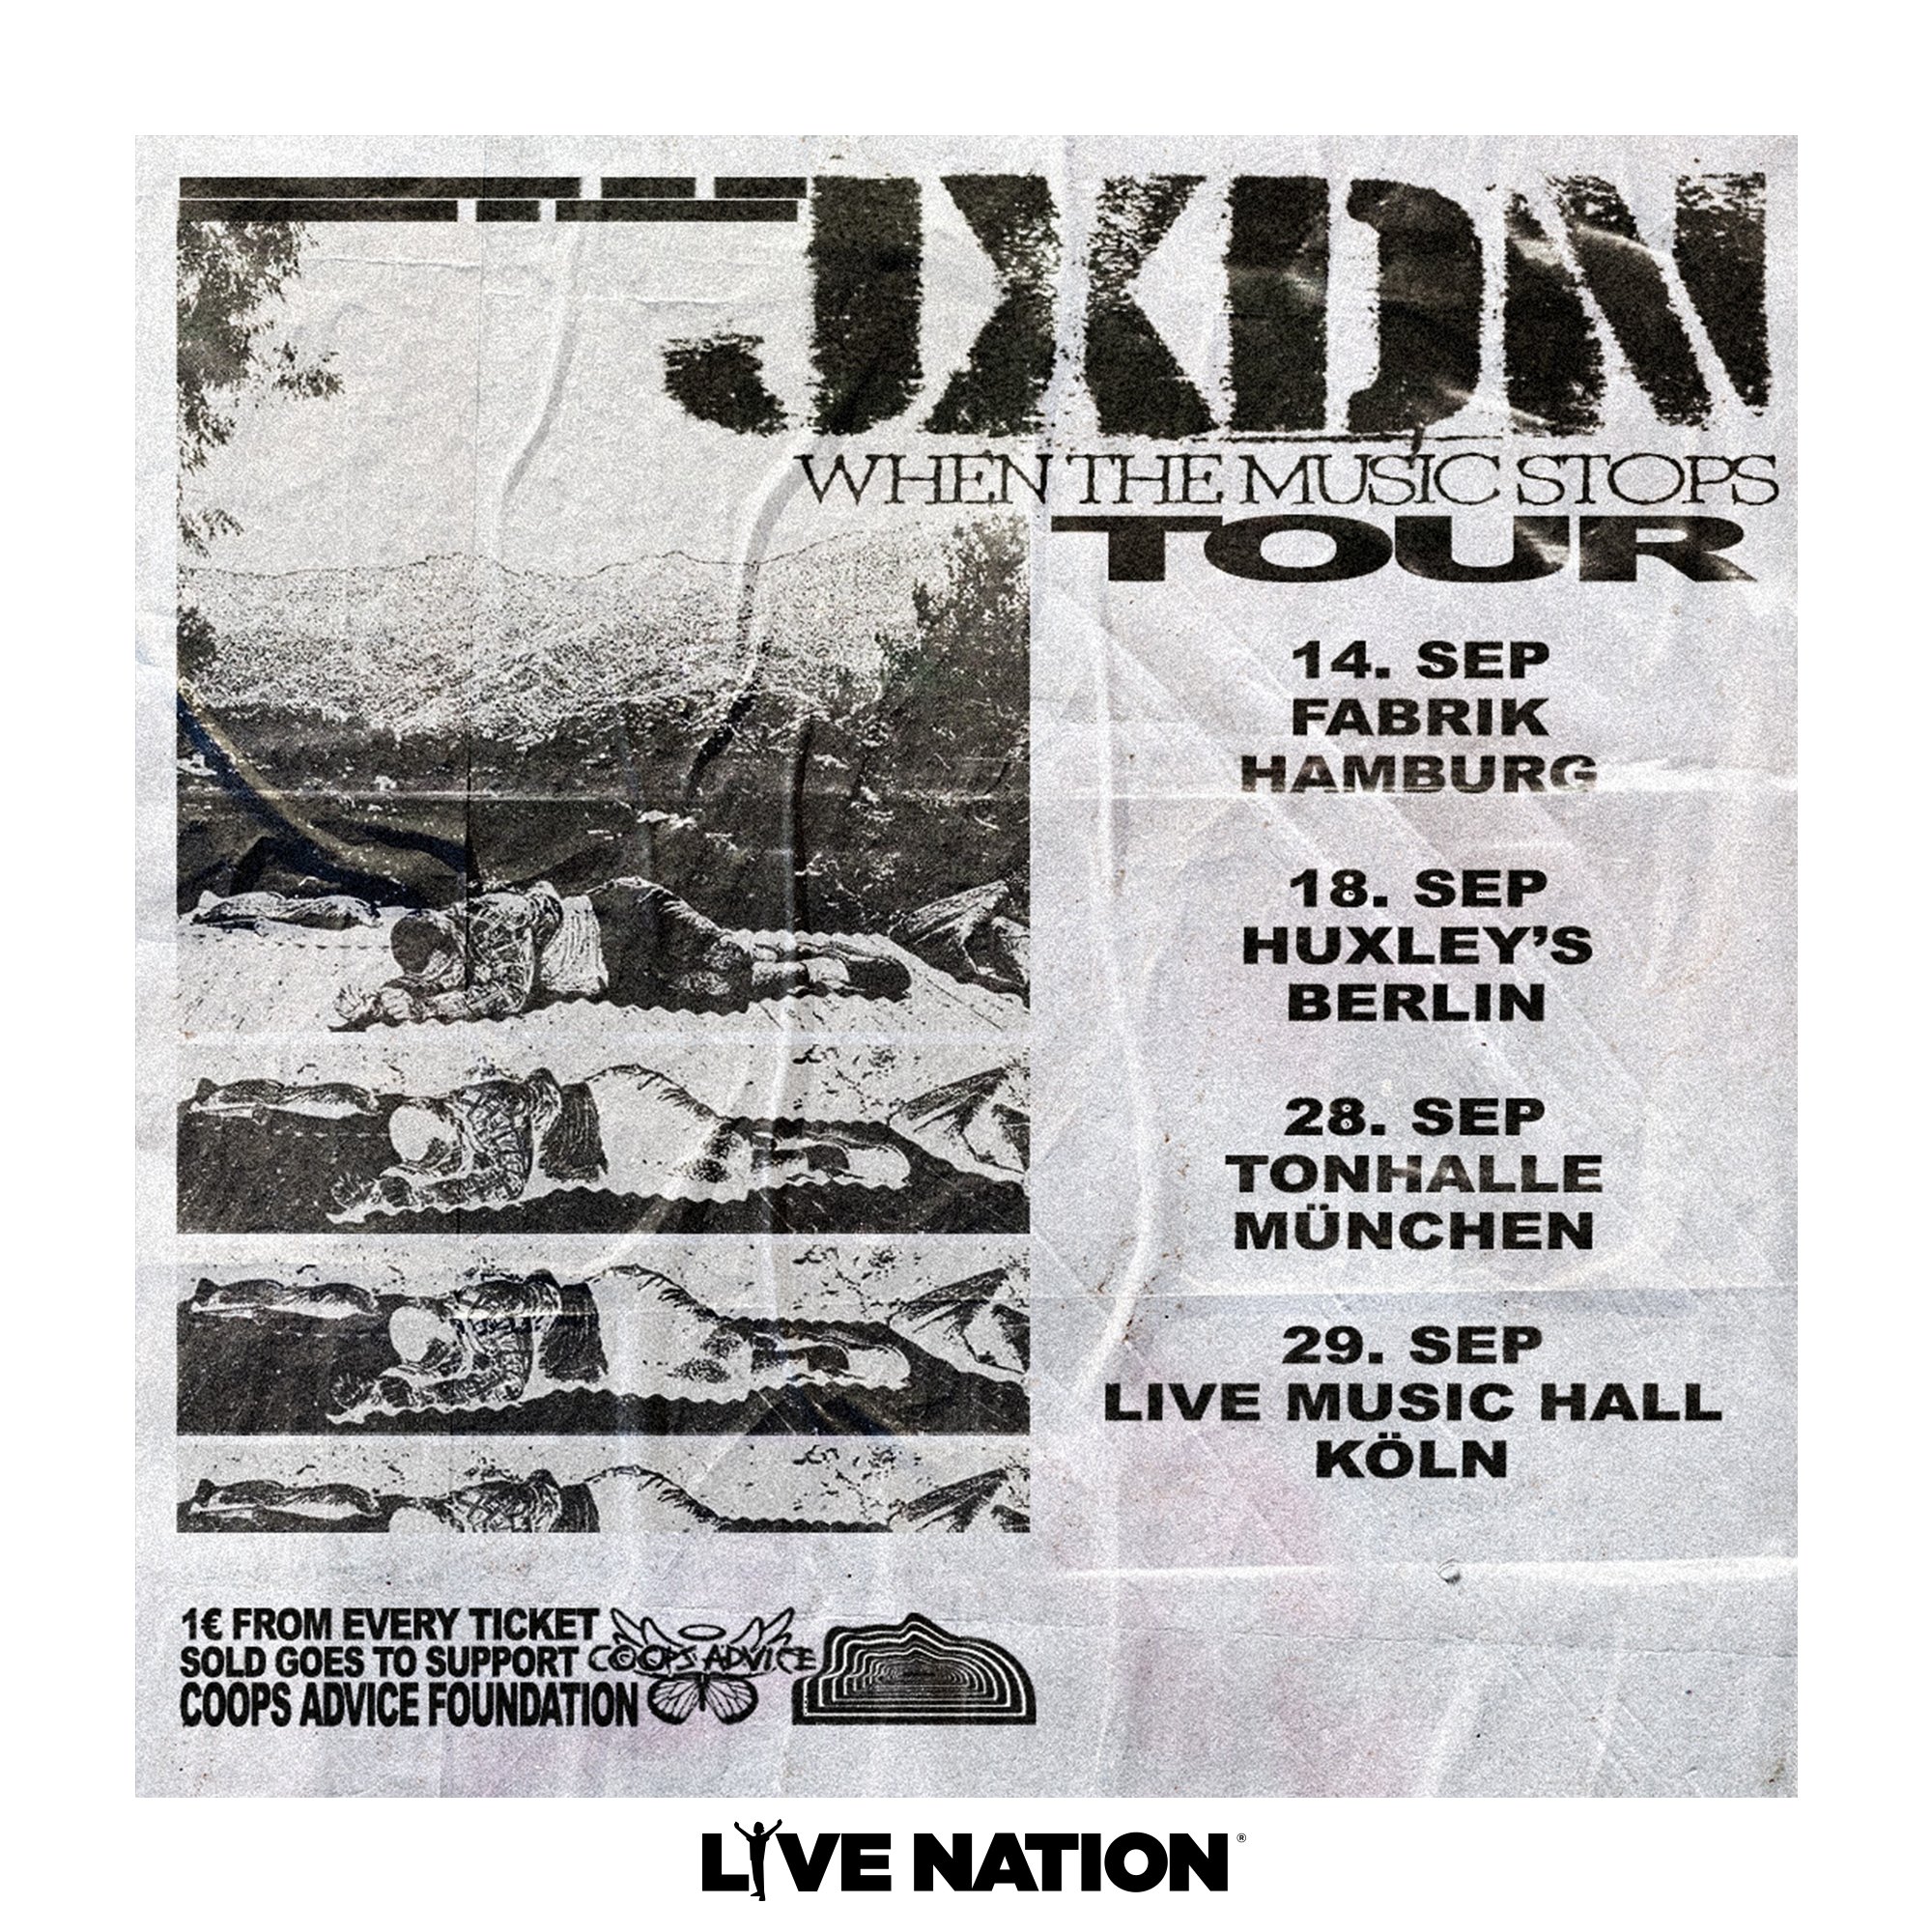 Jxdn - When The Music Stops Tour at Fabrik Hamburg Tickets